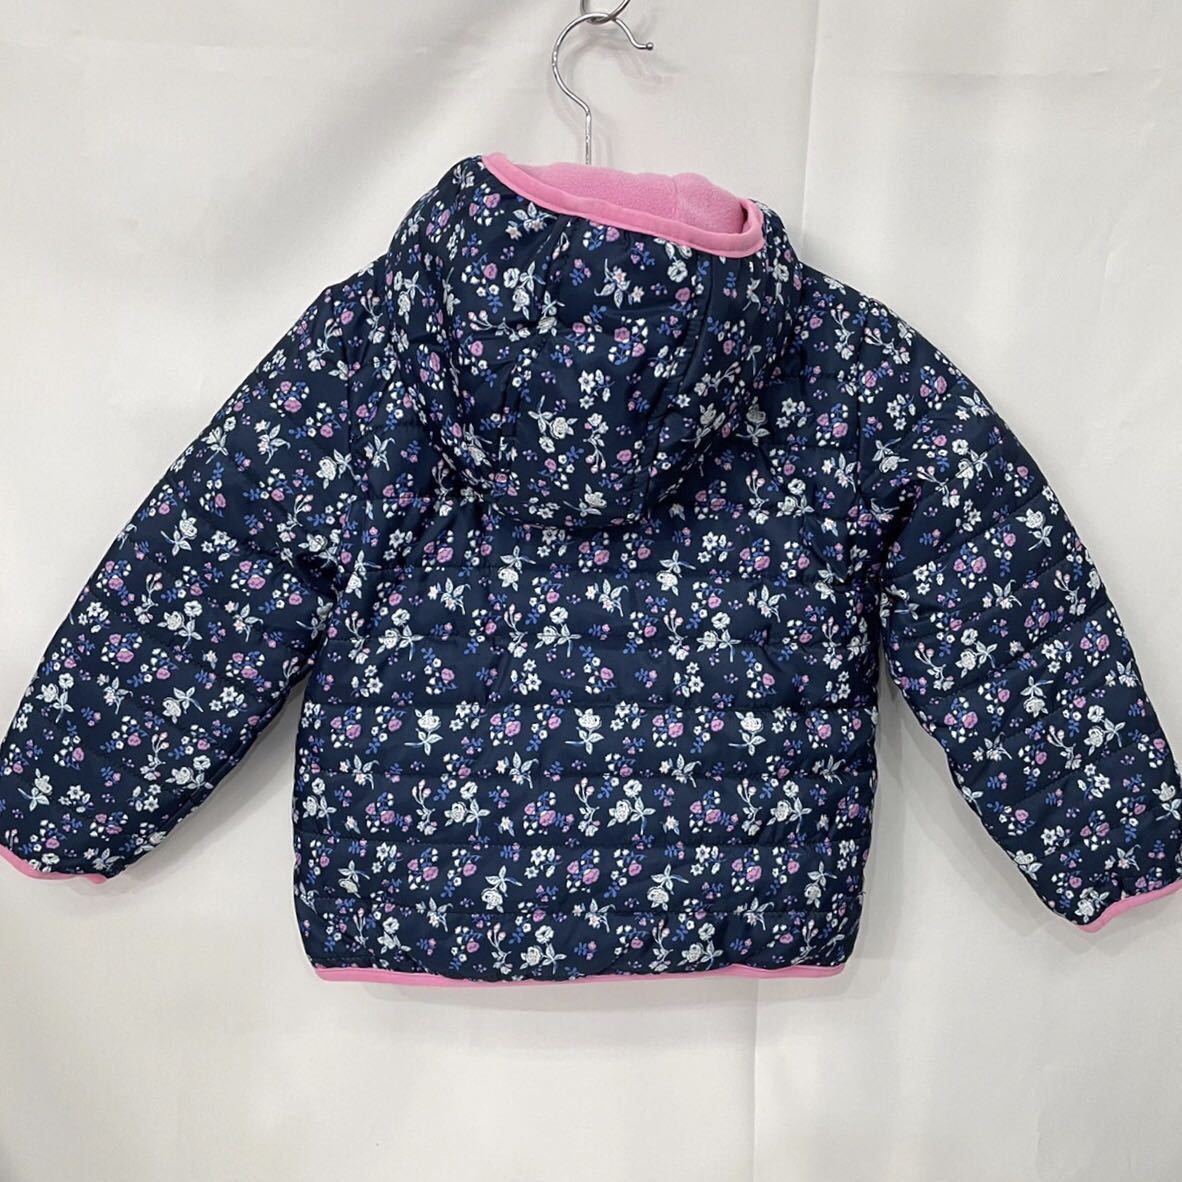  new goods #kensie girl girl jacket 4T 4 -years old 100 floral print jumper fleece warm!